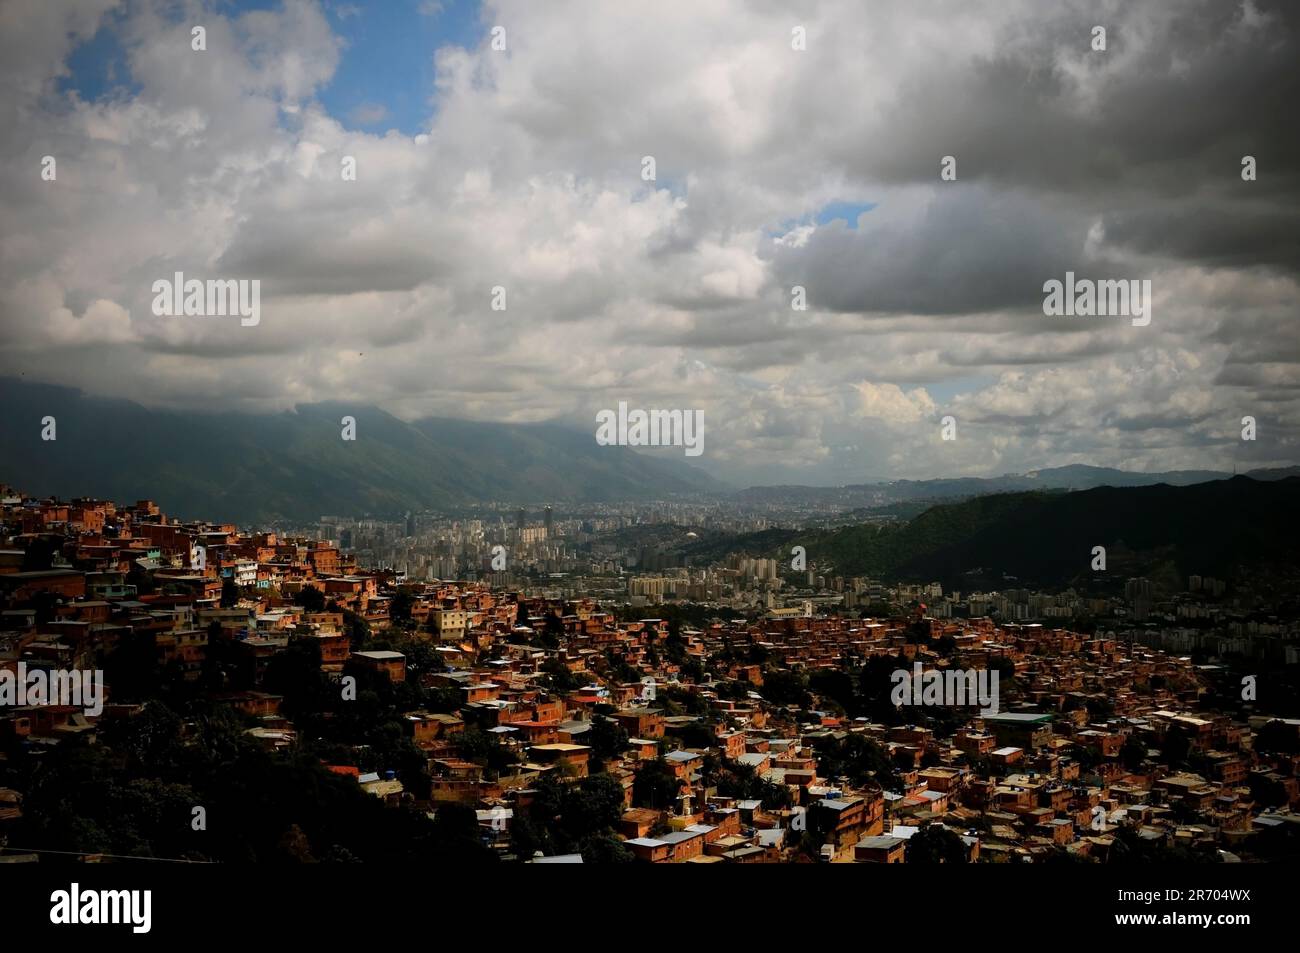 A sweeping cityscape of Caracas, Venezuela under a cloudy sky. Stock Photo